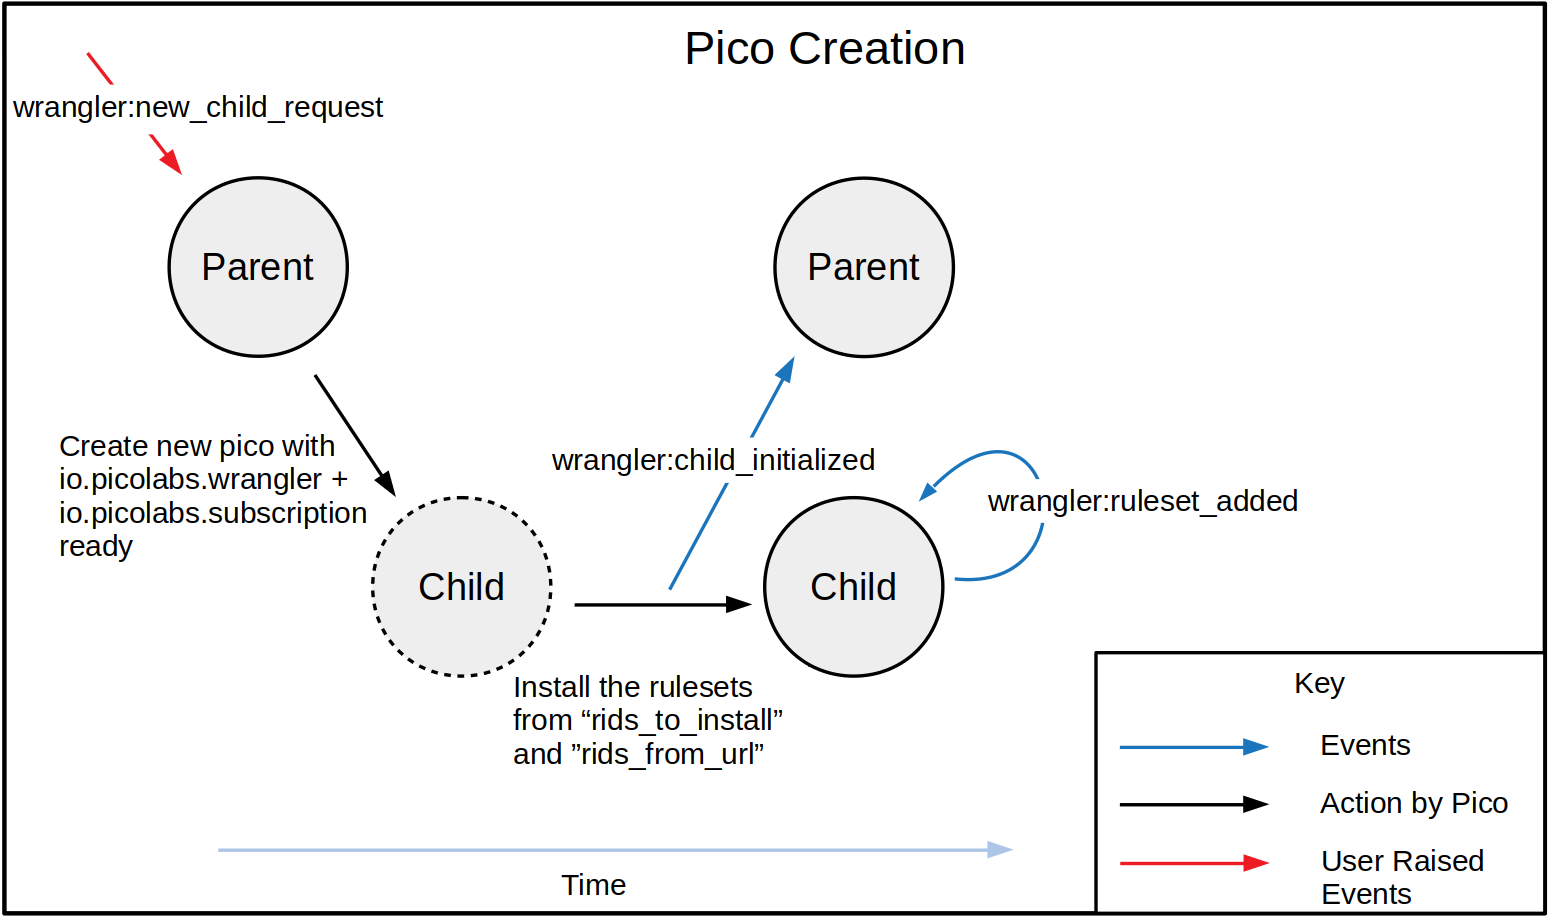 Pico Creation